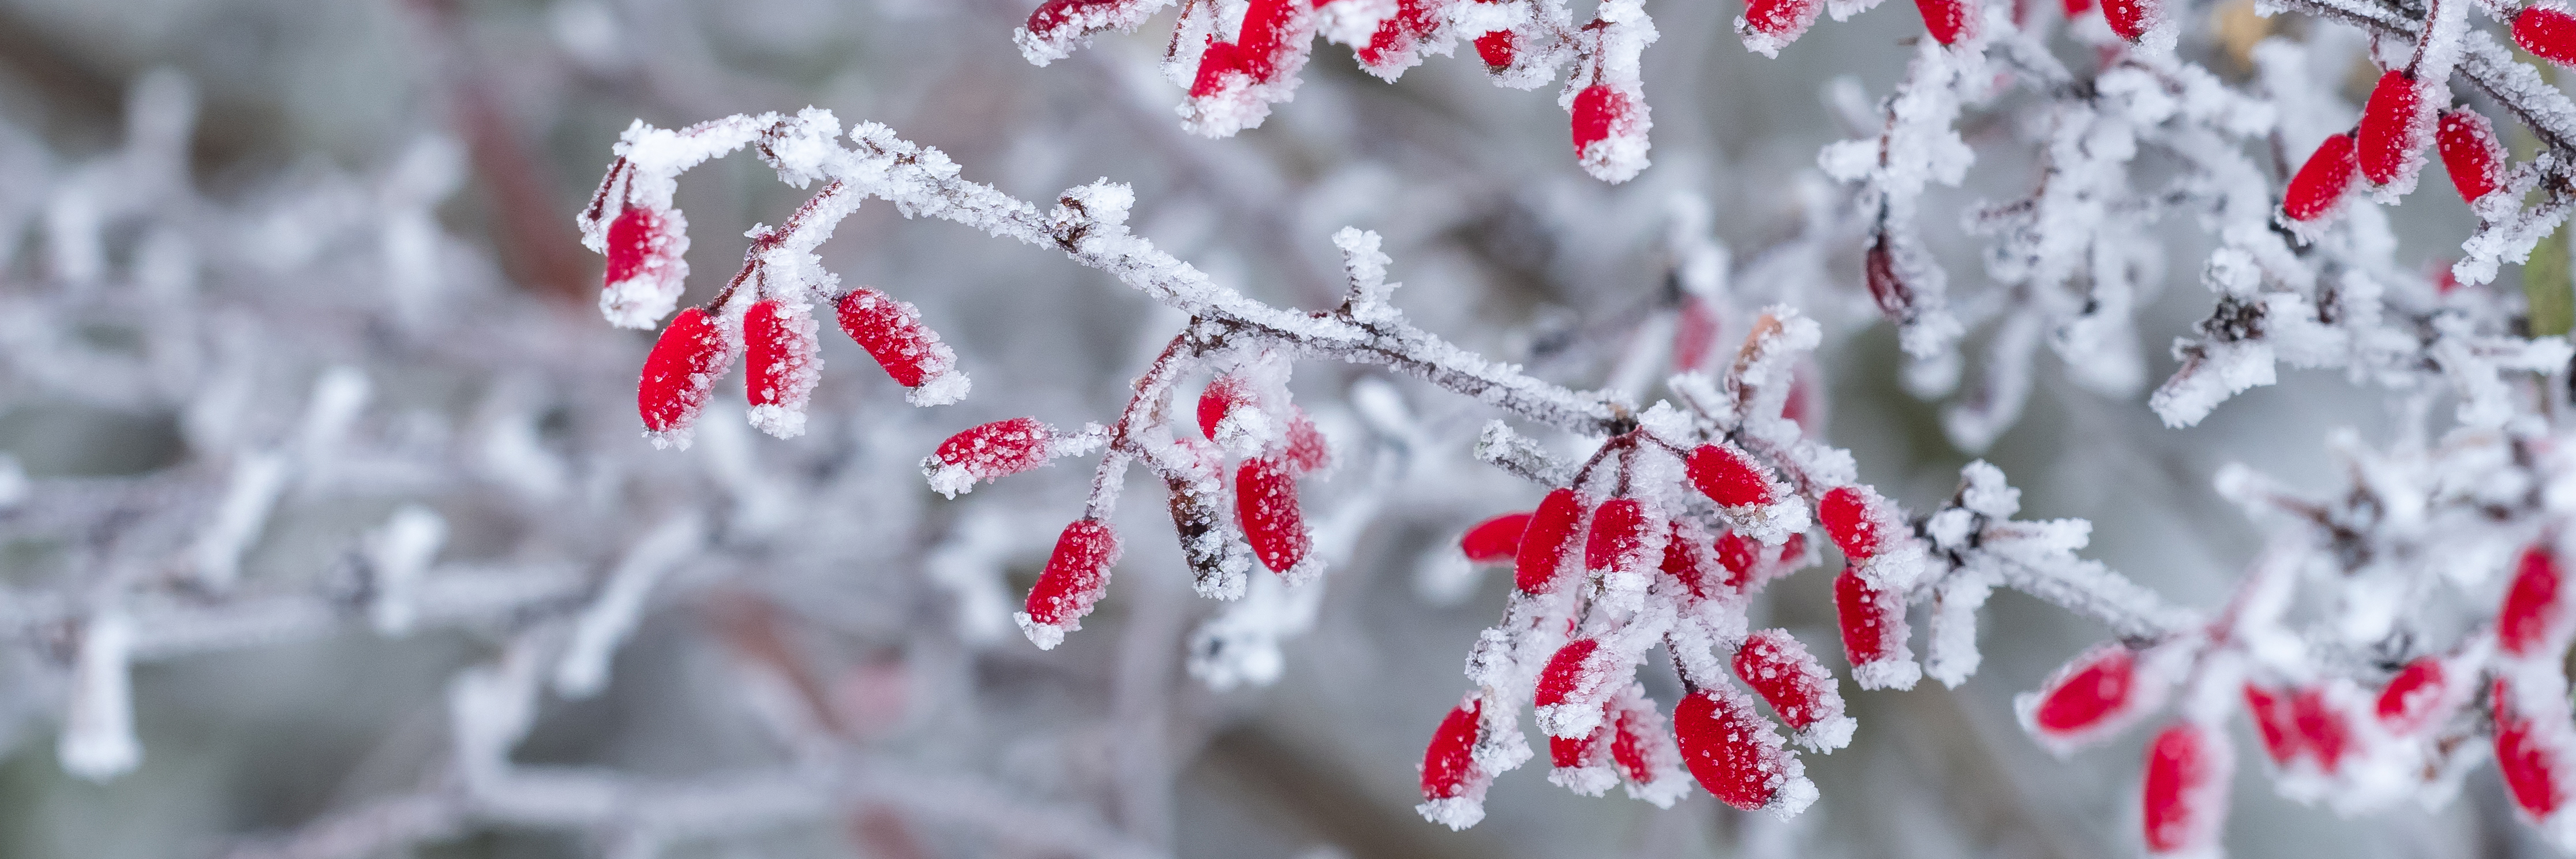 Foto: kvist med frost